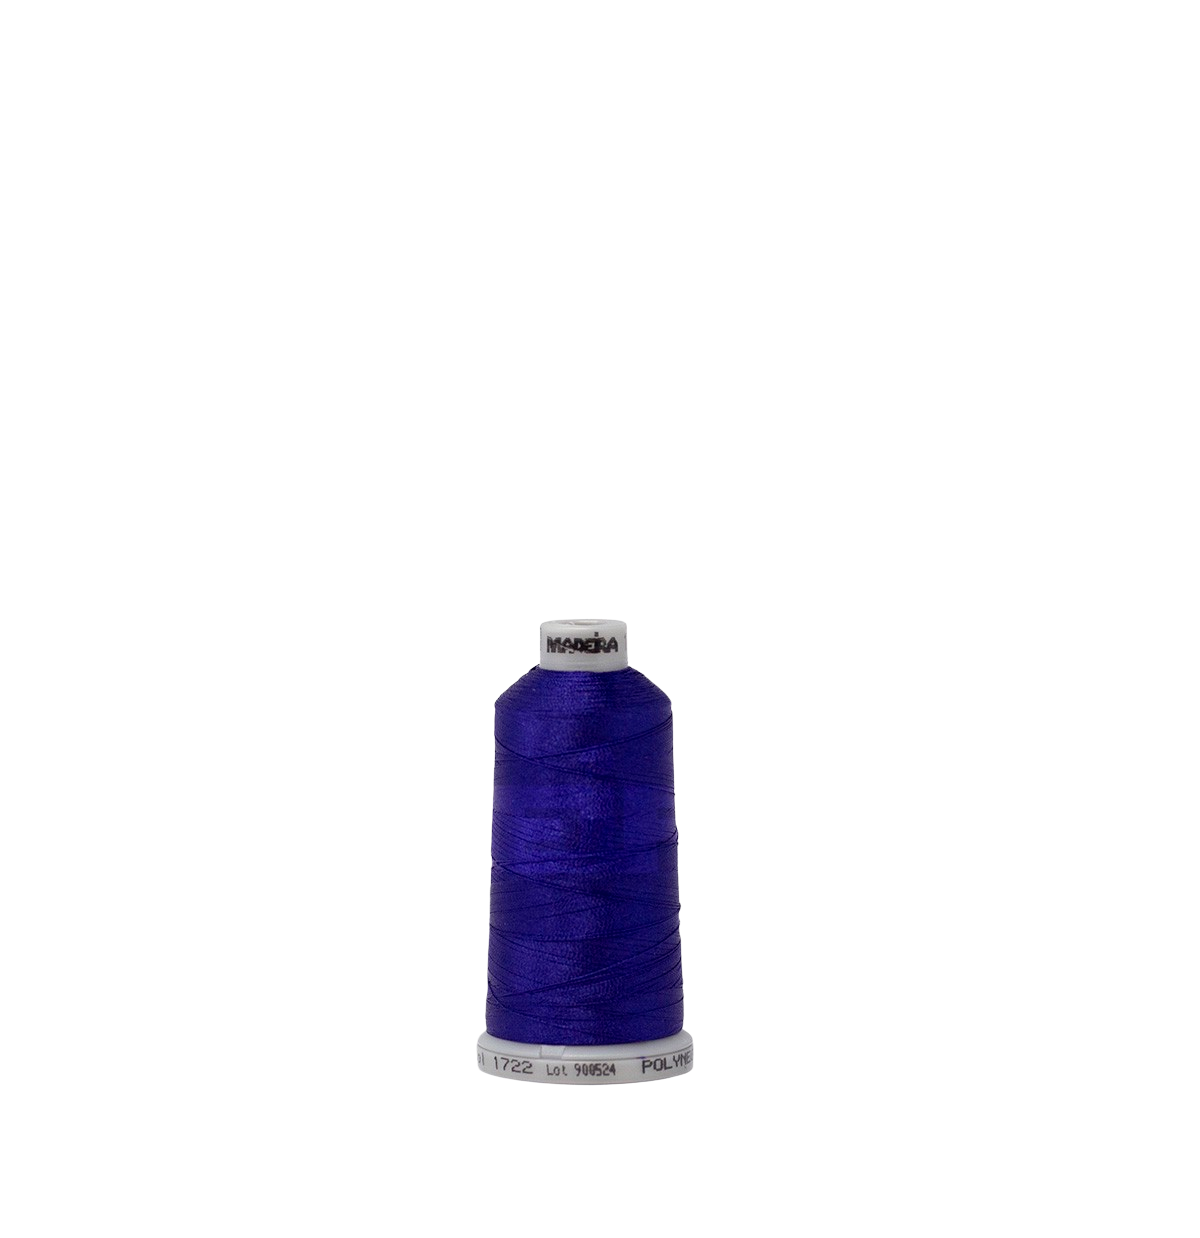 Royal Purple 1722 #40 Weight Madeira Polyneon Thread